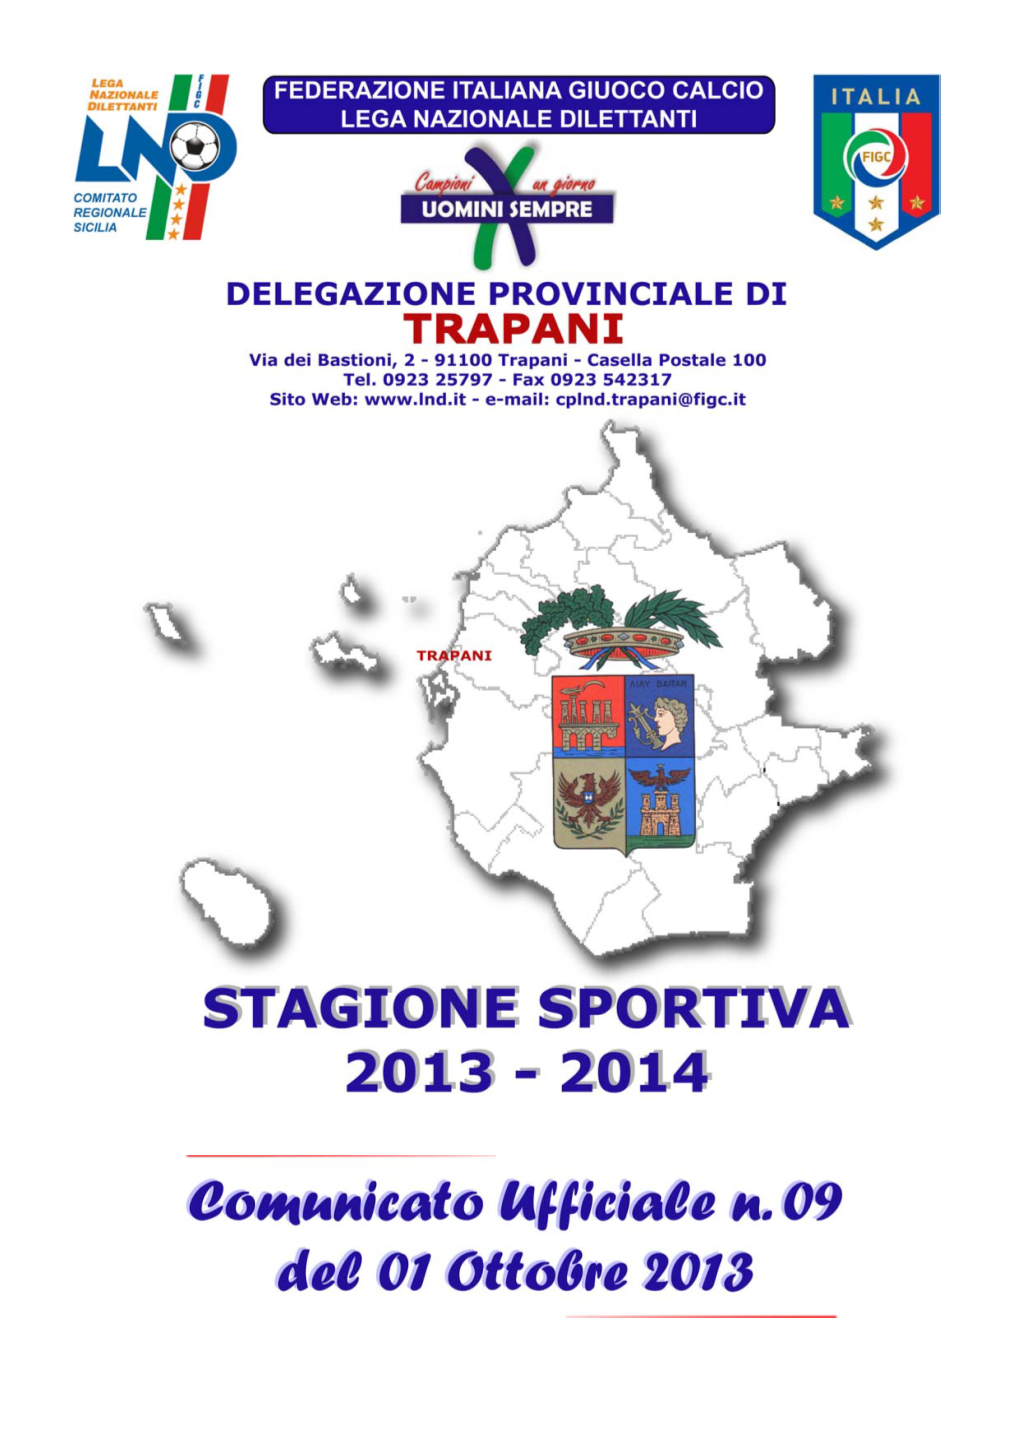 Campionato Juniores Regionale Fase Provinciale Calendario Stagione 2013/2014